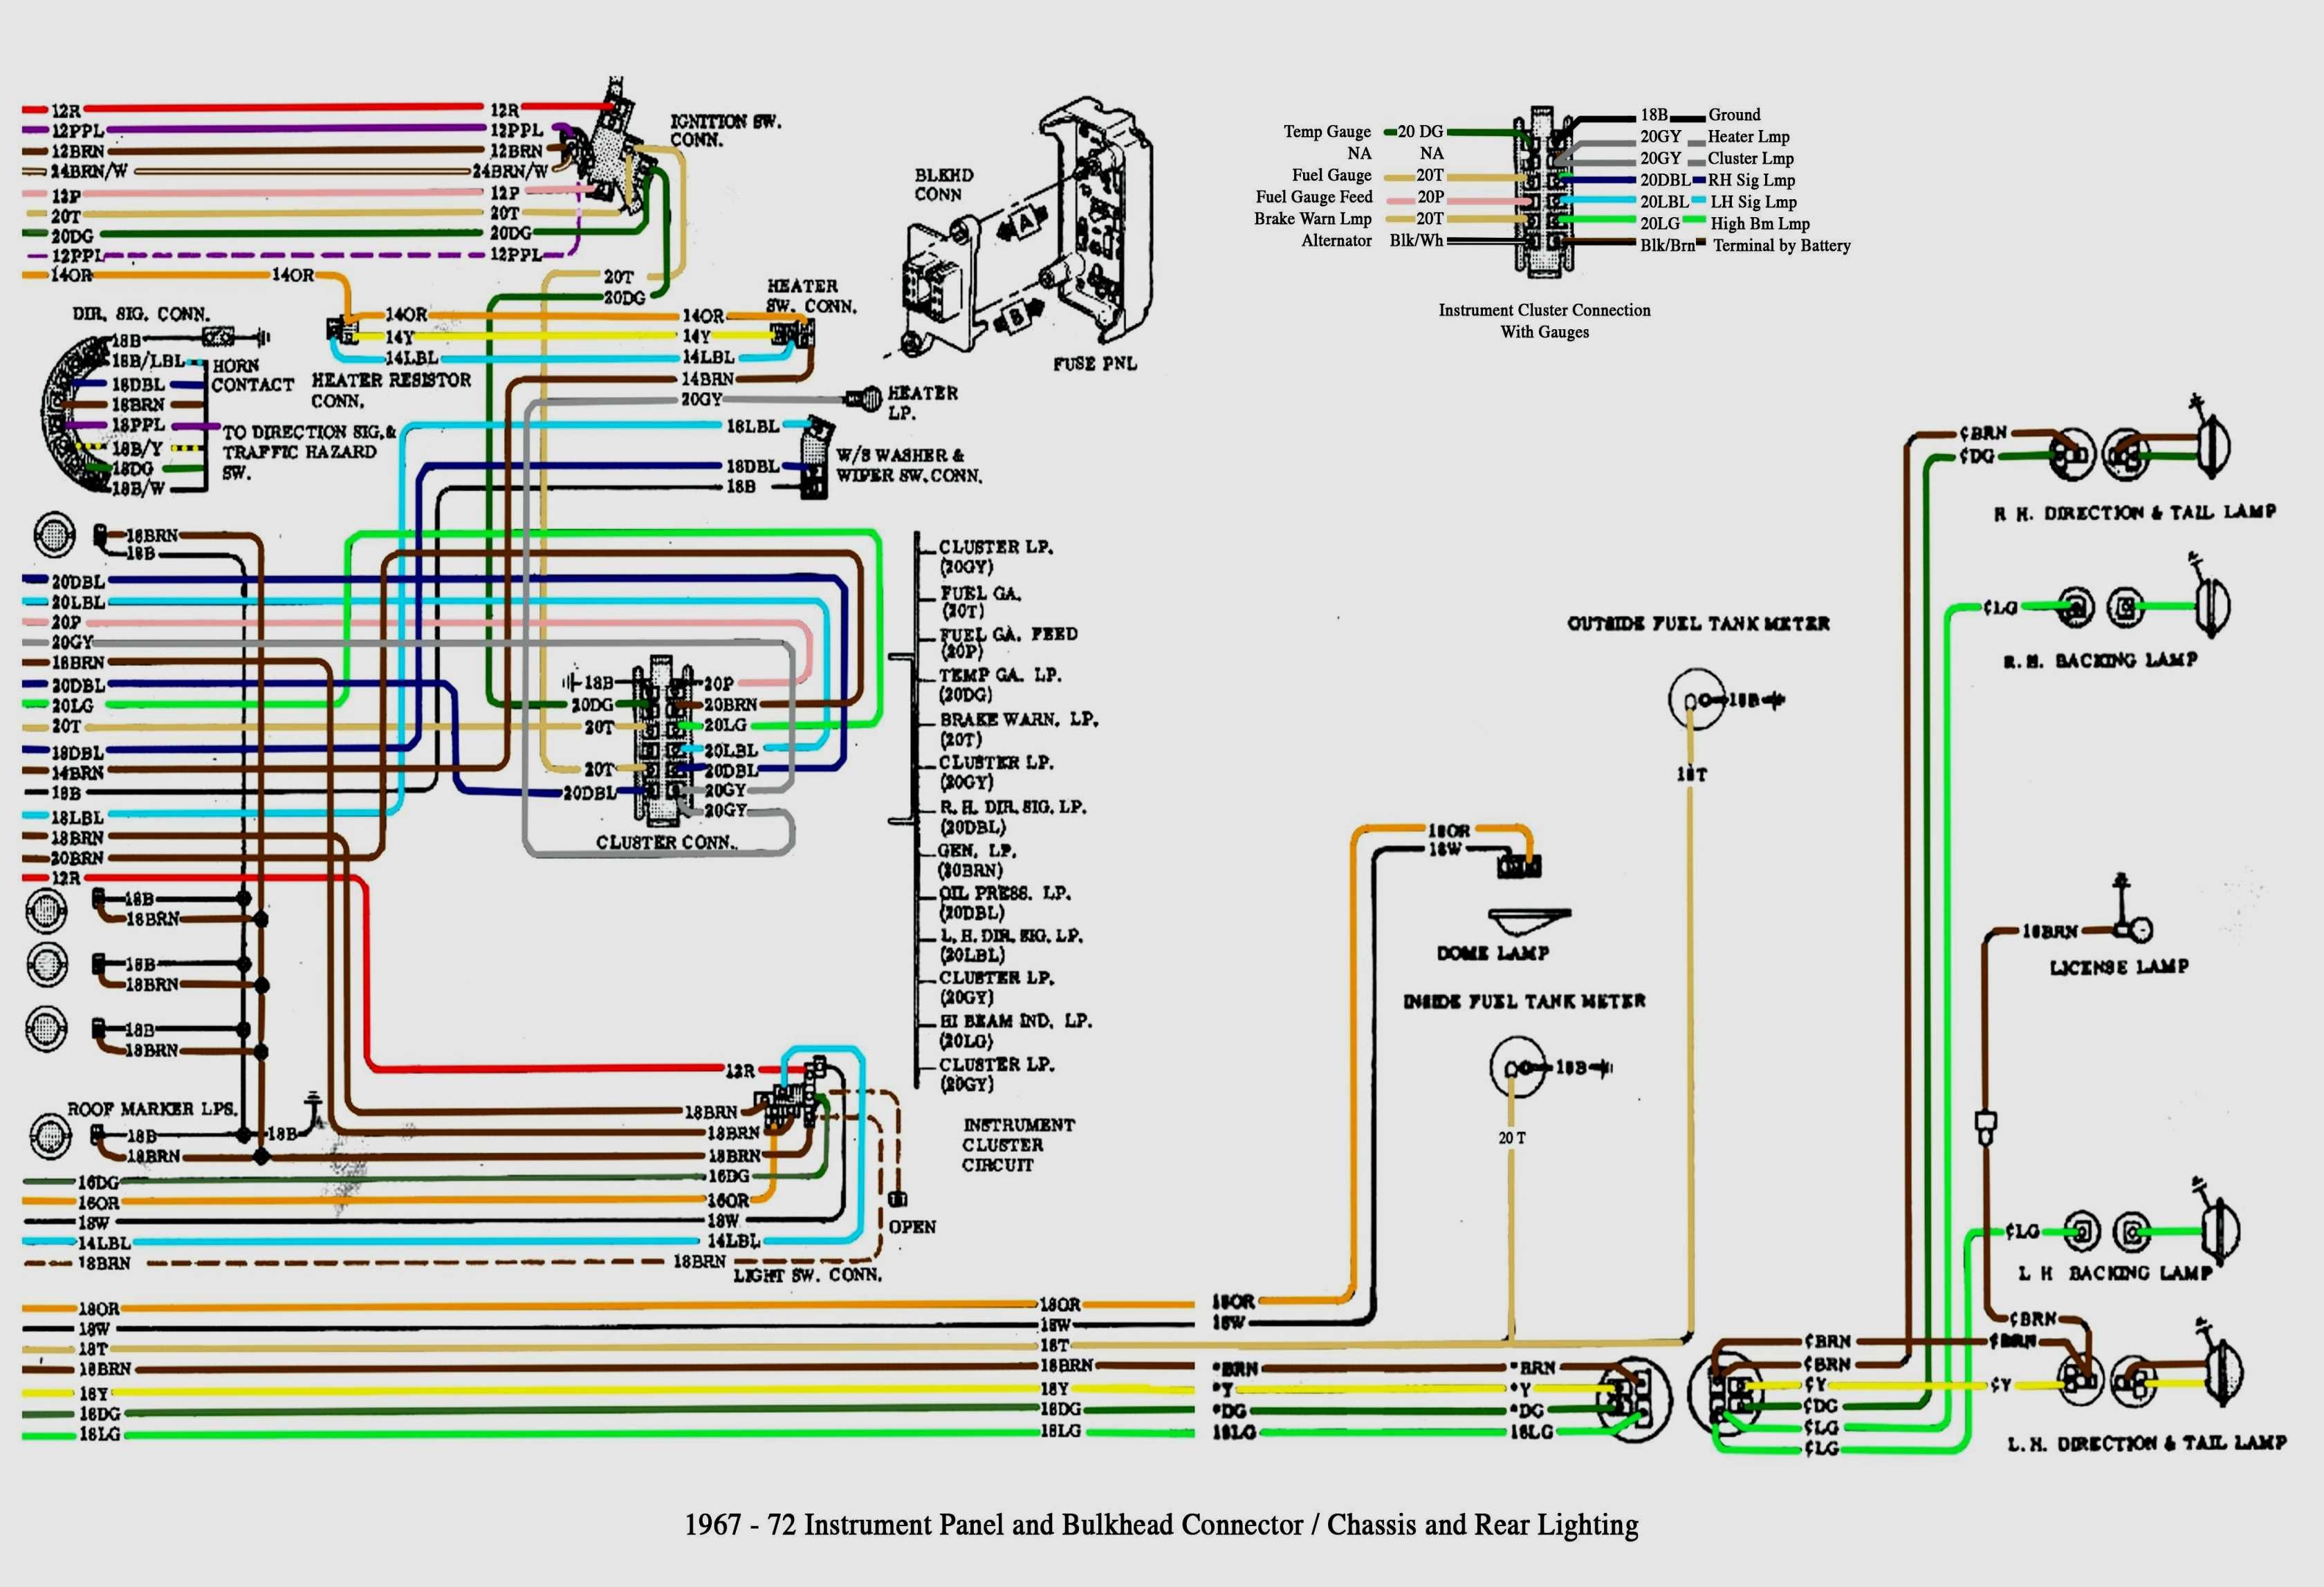 2002 Chevy Trailblazer Engine Diagram Wiring Diagram 2002 Chevrolet Trailblazer Of 2002 Chevy Trailblazer Engine Diagram